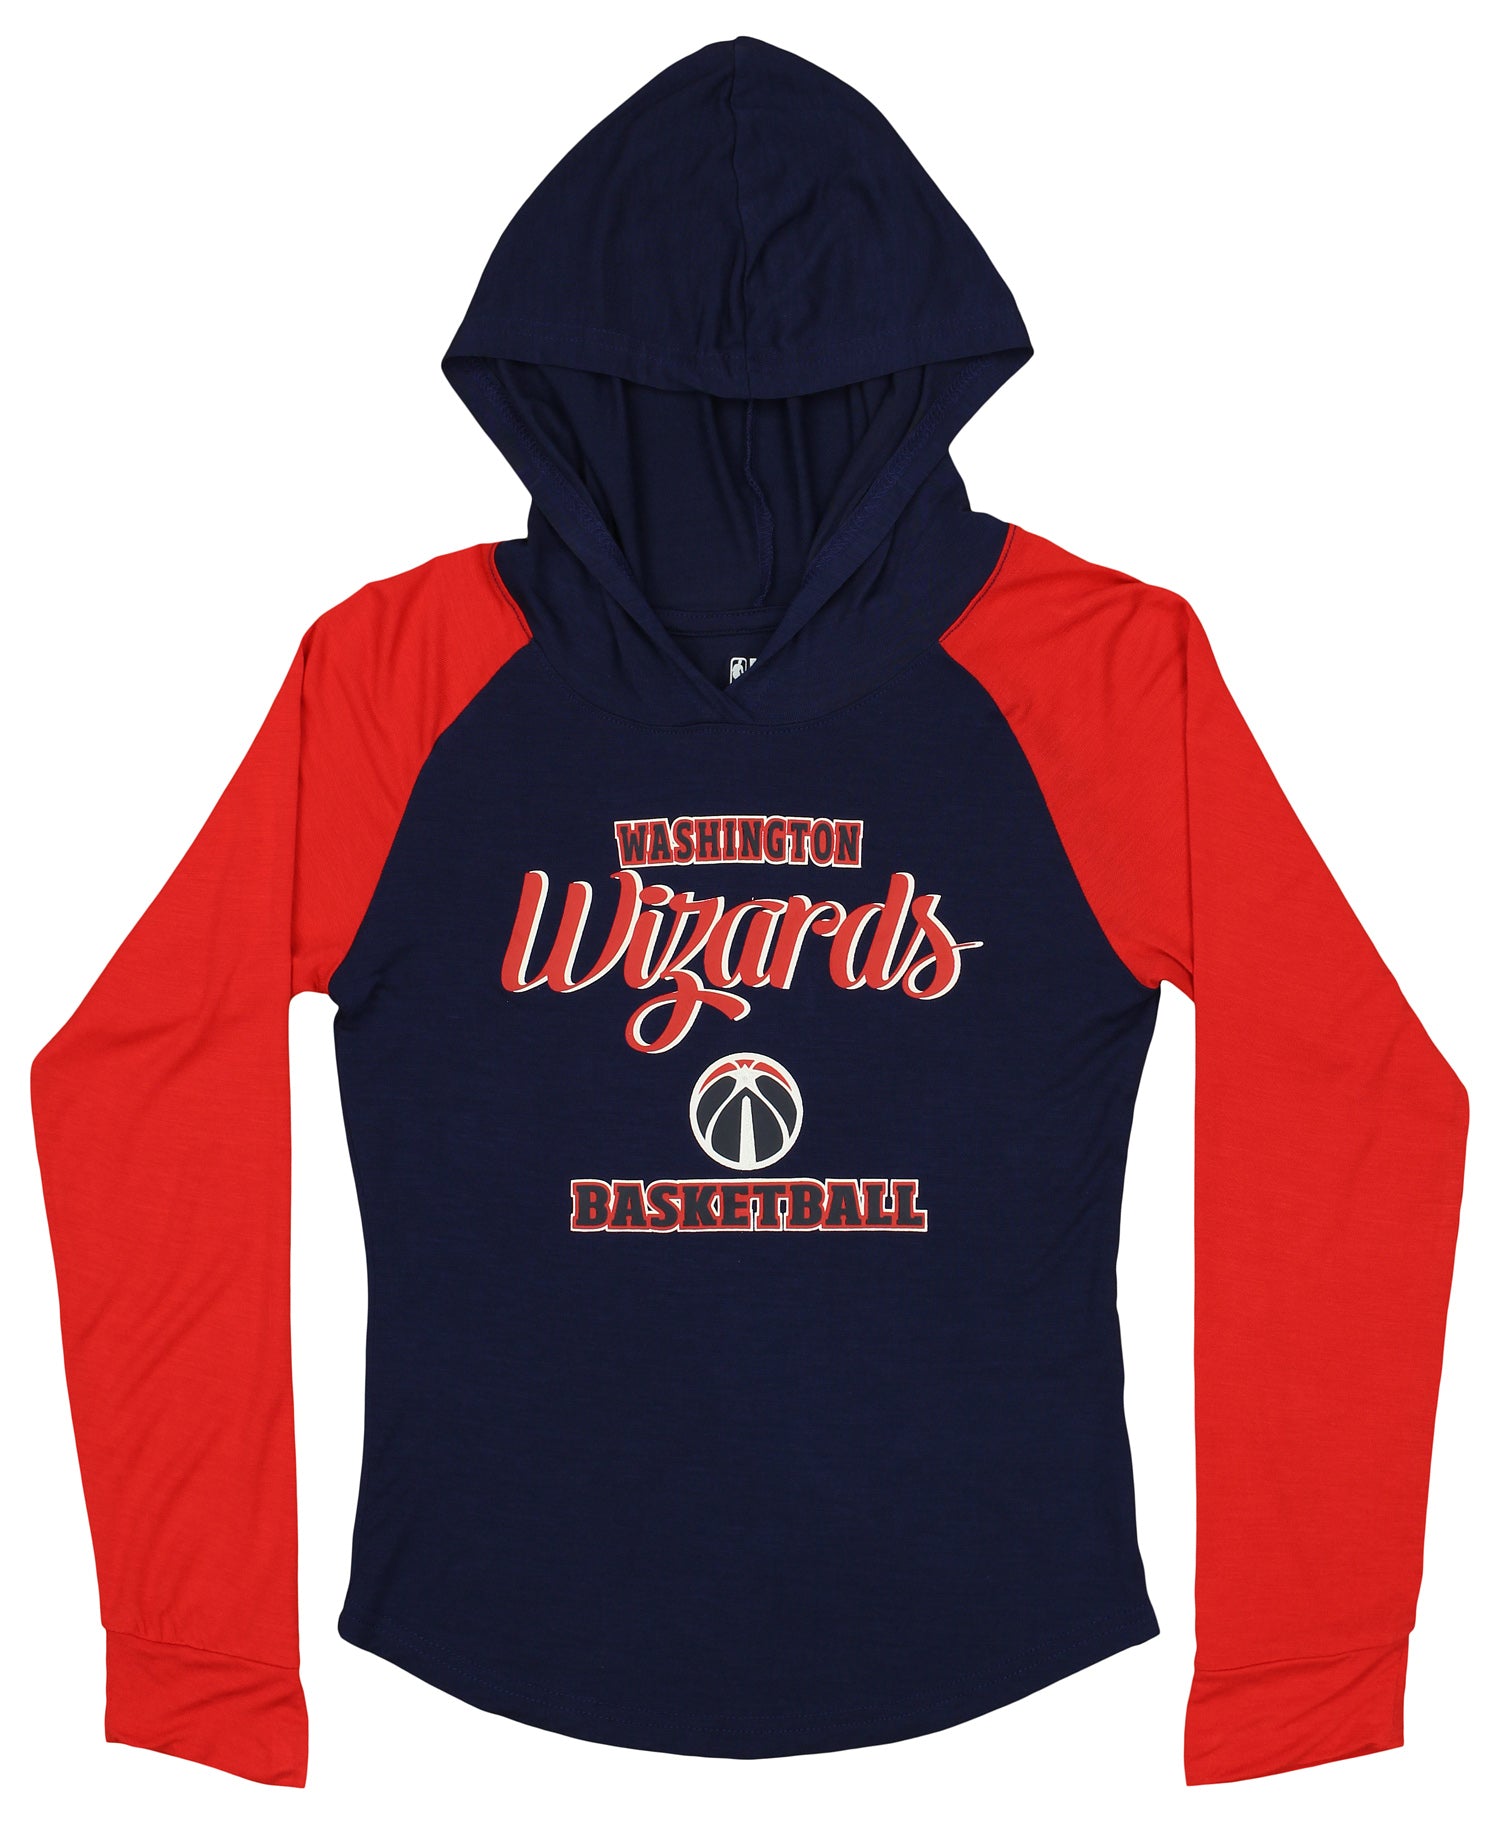 Washington Wizards Team Shop in NBA Fan Shop 